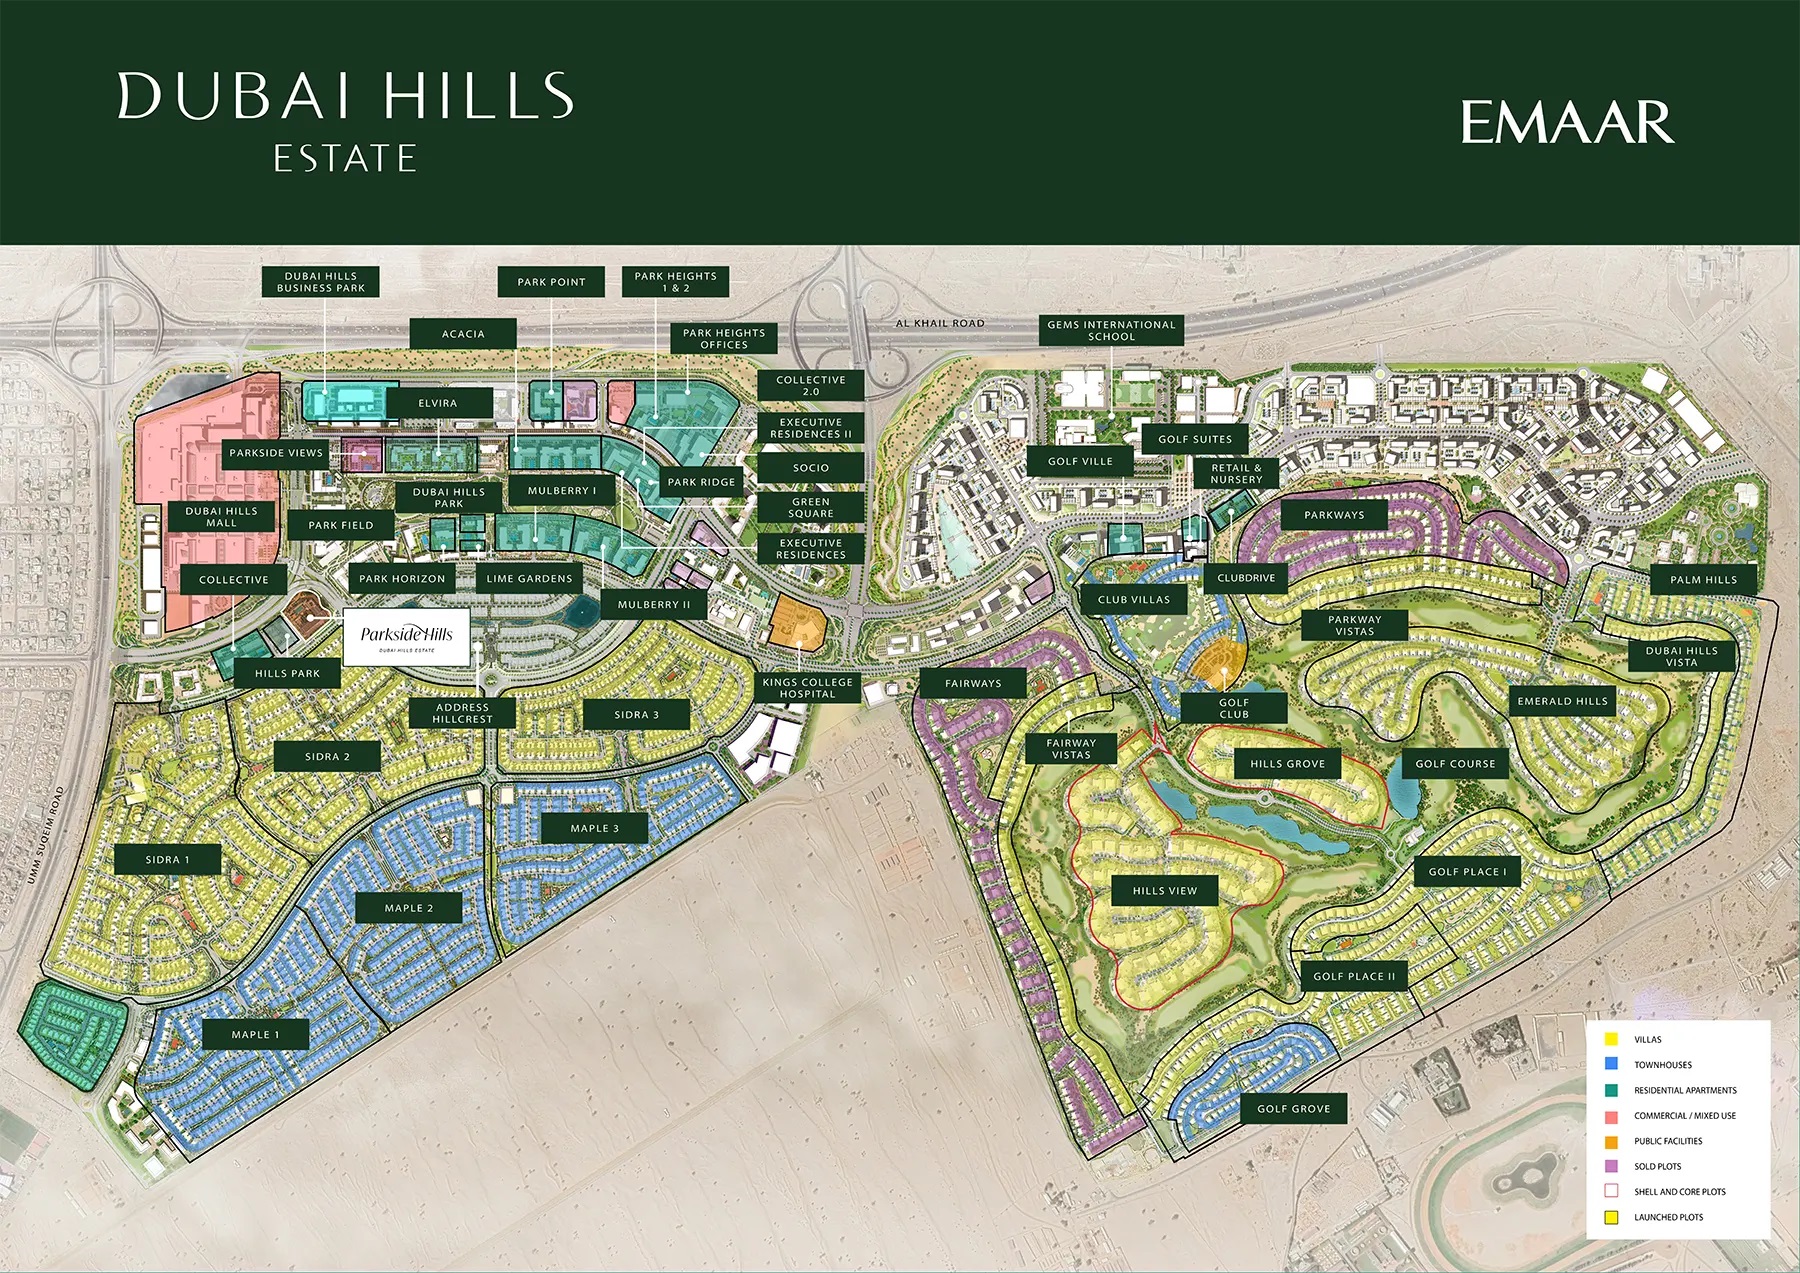 latest-project-in-dubai-parkside-hills-for-sale-in-dubai-hills-estate